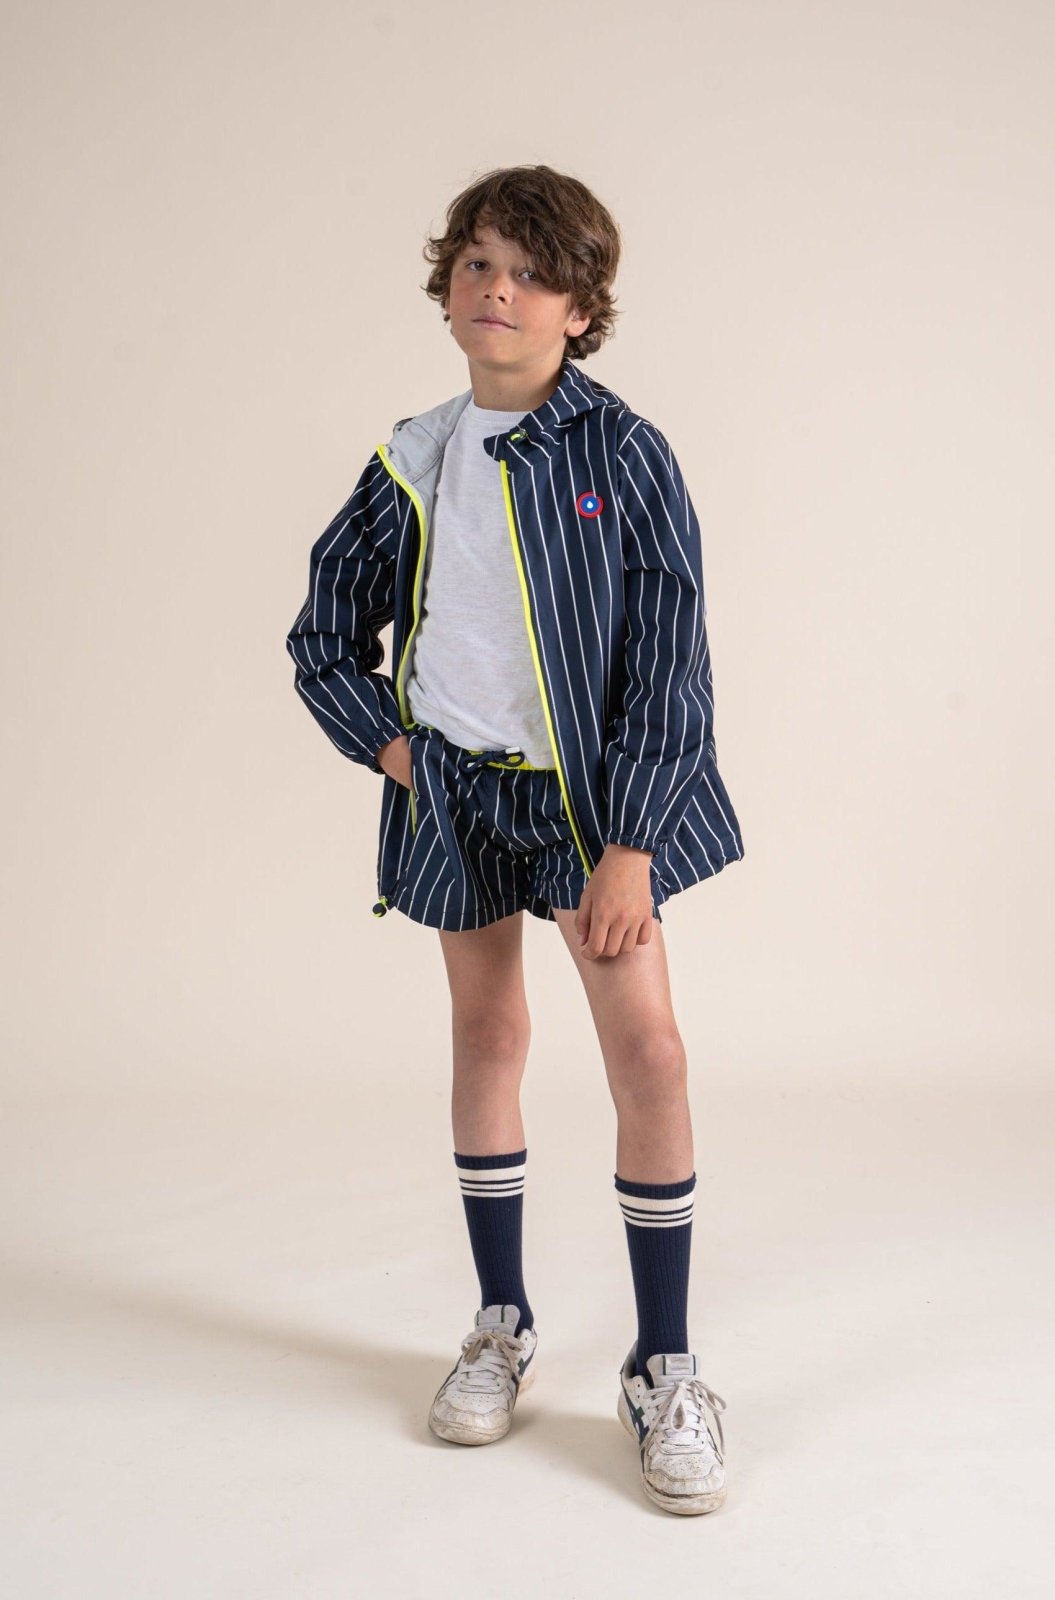 Raincoat and shorts for kids - Flotte x Gili's